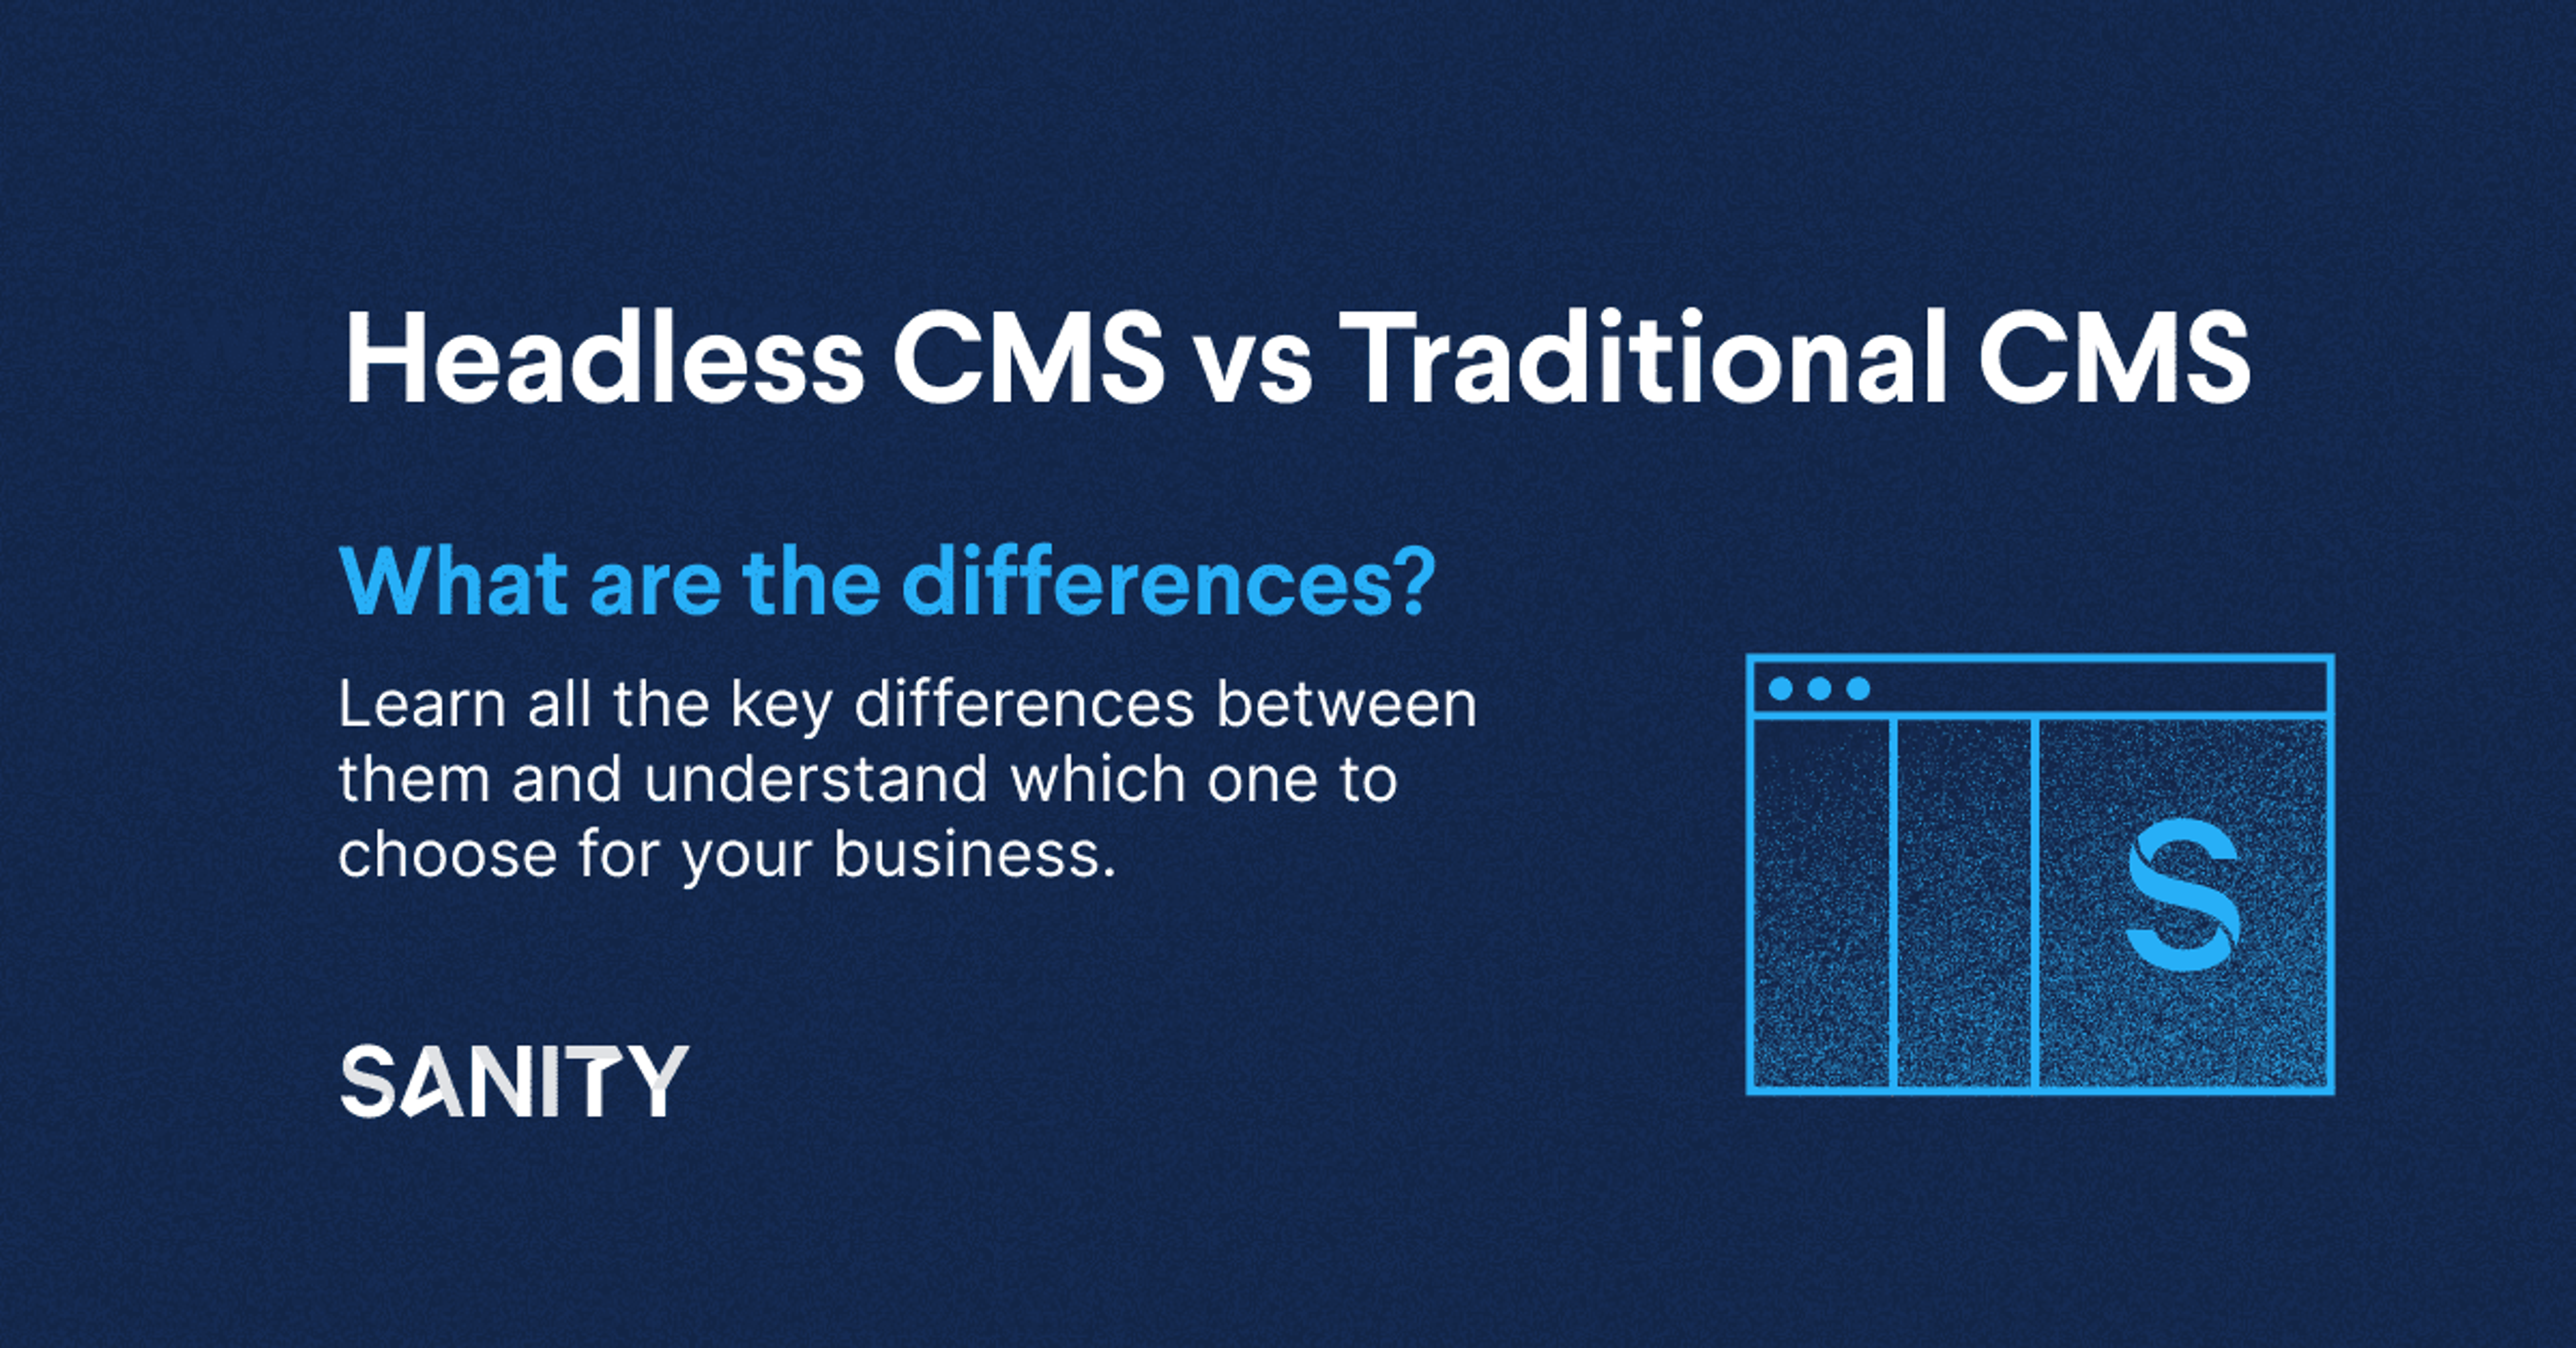 Headless CMS vs. Traditional CMS